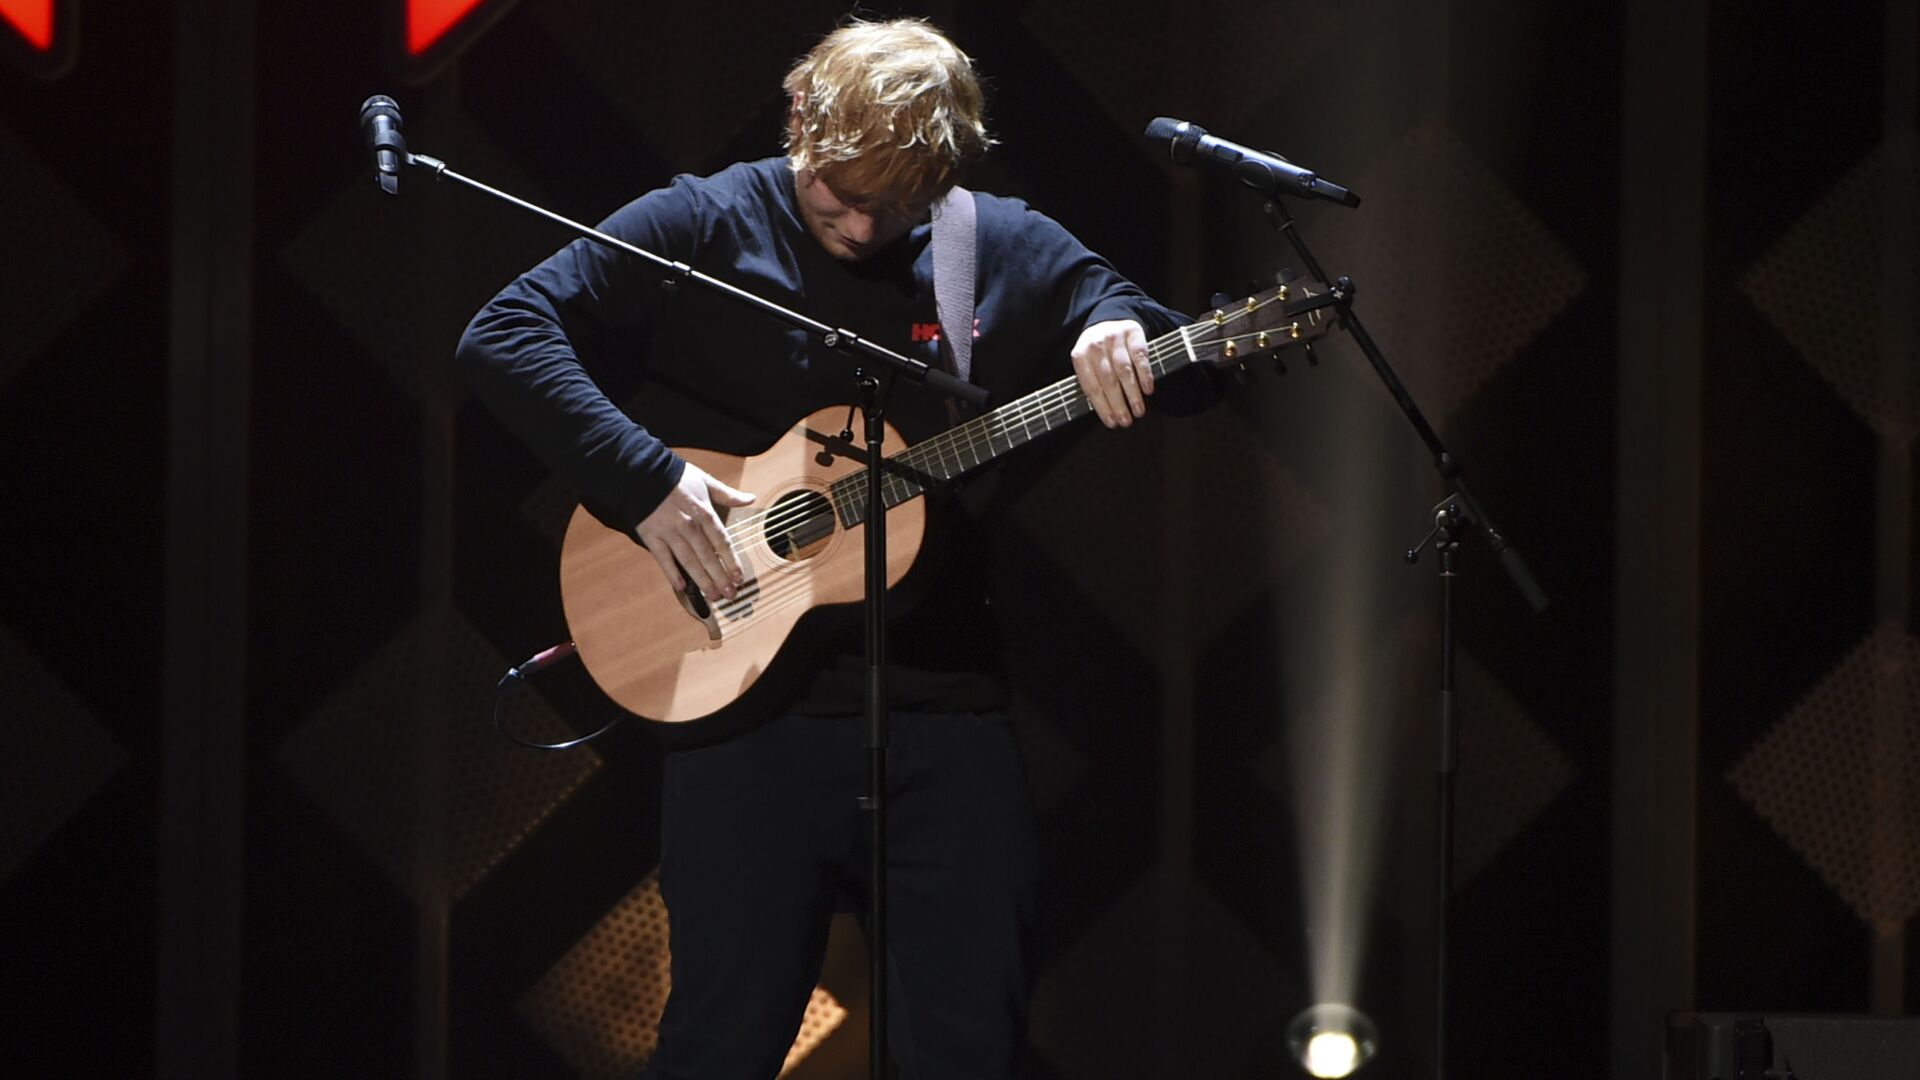 Singer-songwriter Ed Sheeran performs at Z100's iHeartRadio Jingle Ball at Madison Square Garden - Sputnik International, 1920, 20.07.2021